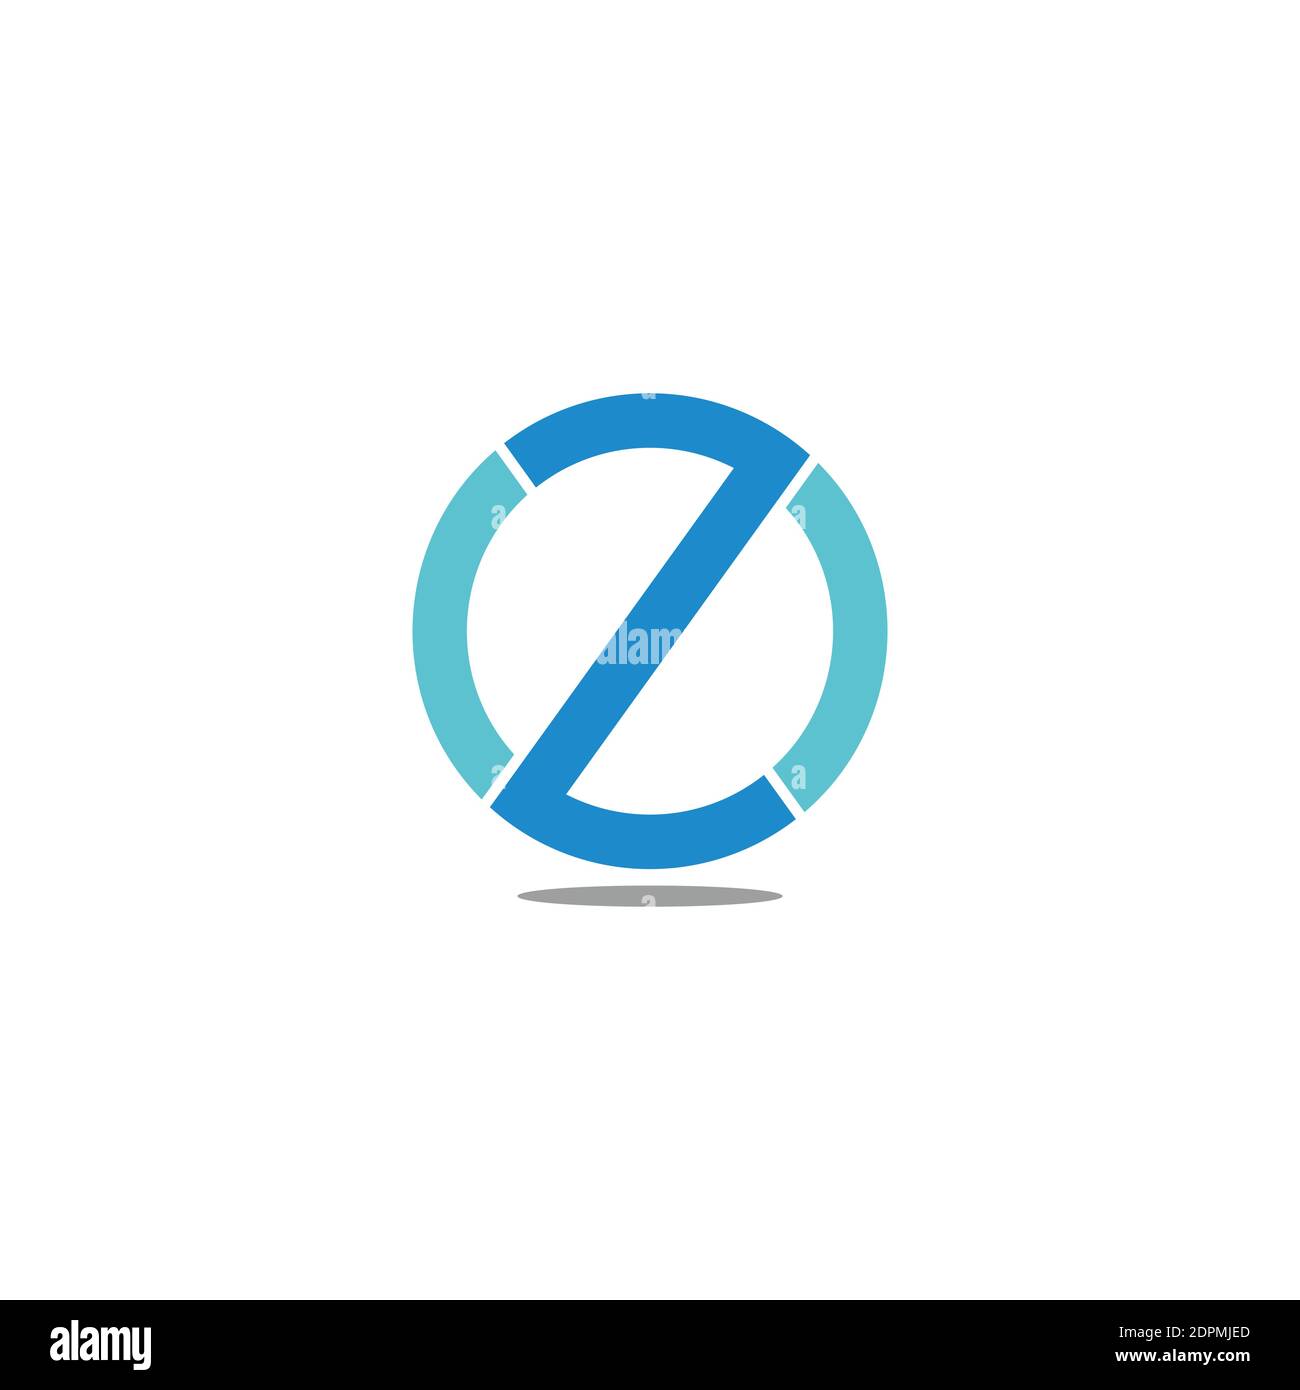 letter oz circle geometric simple design logo vector Stock Vector